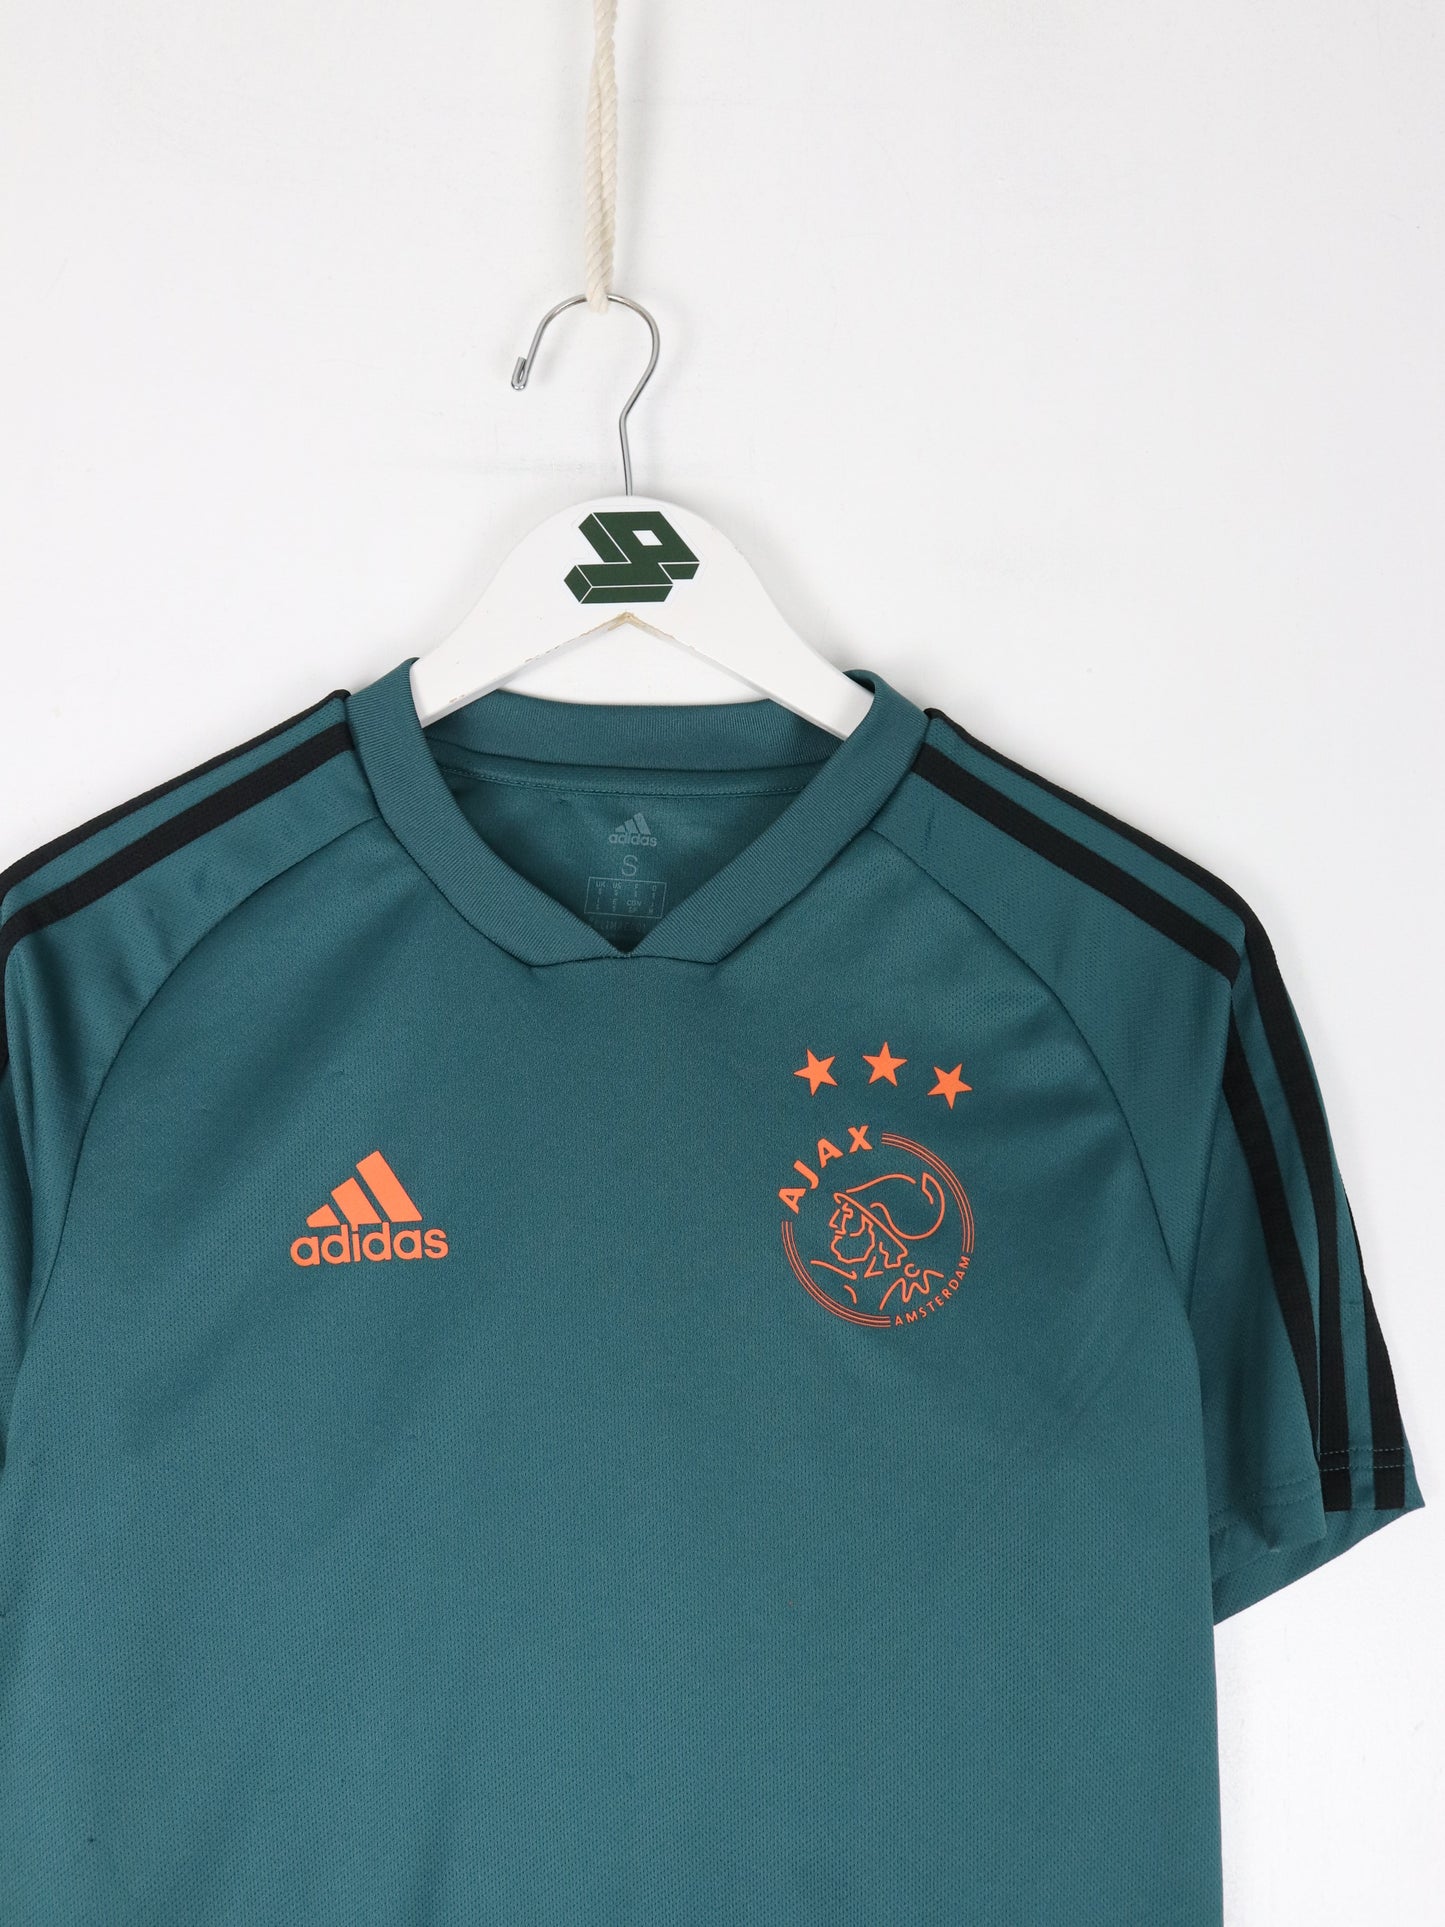 Ajax Soccer Jersey Mens Small Blue Training Kit Adidas Climacool